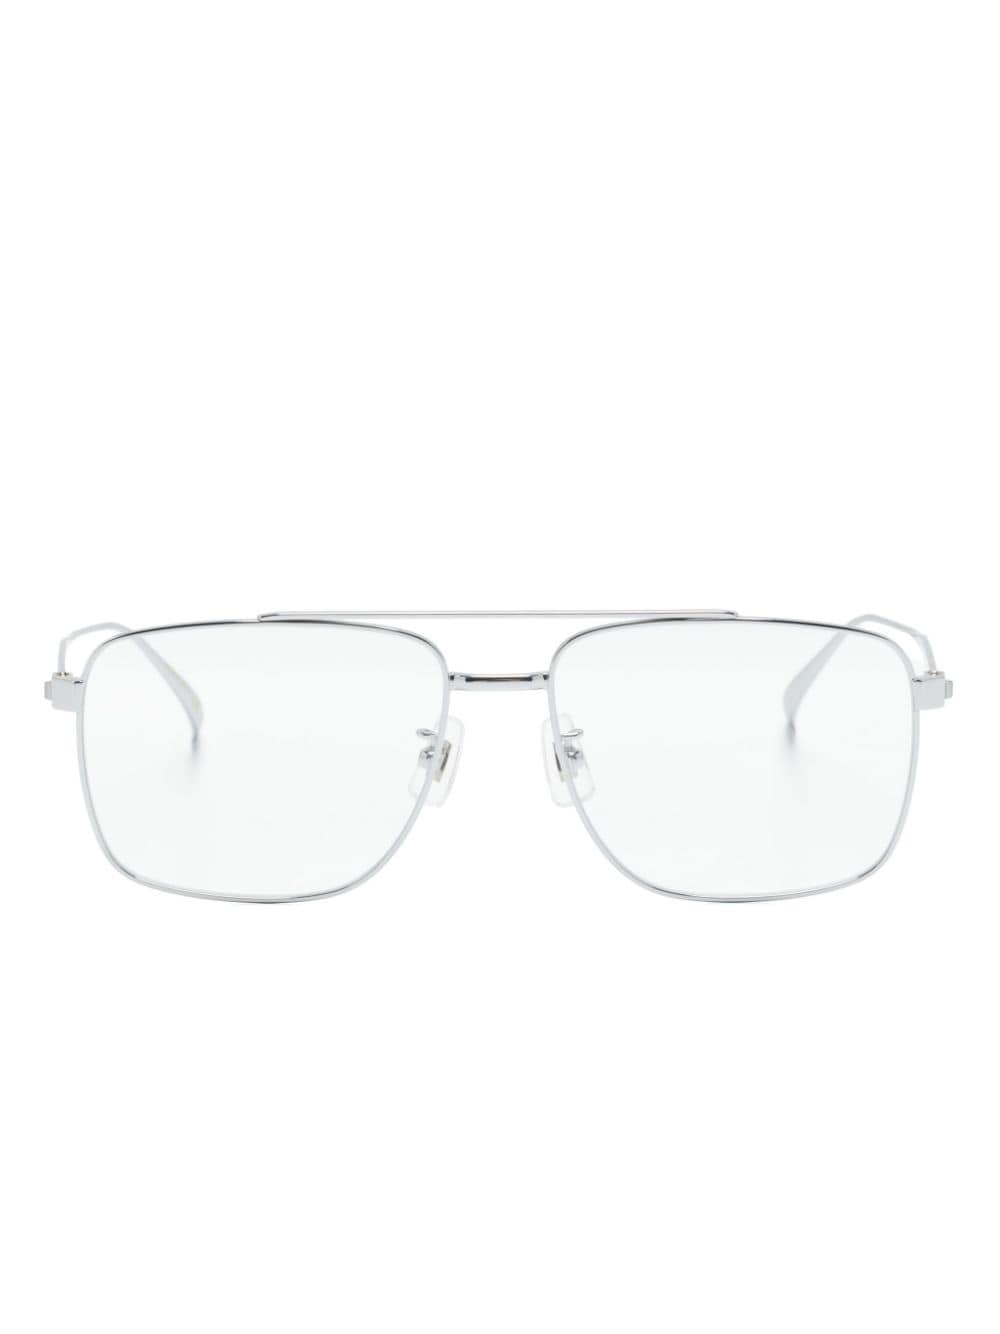 Dunhill pilot-frame glasses - Silver von Dunhill